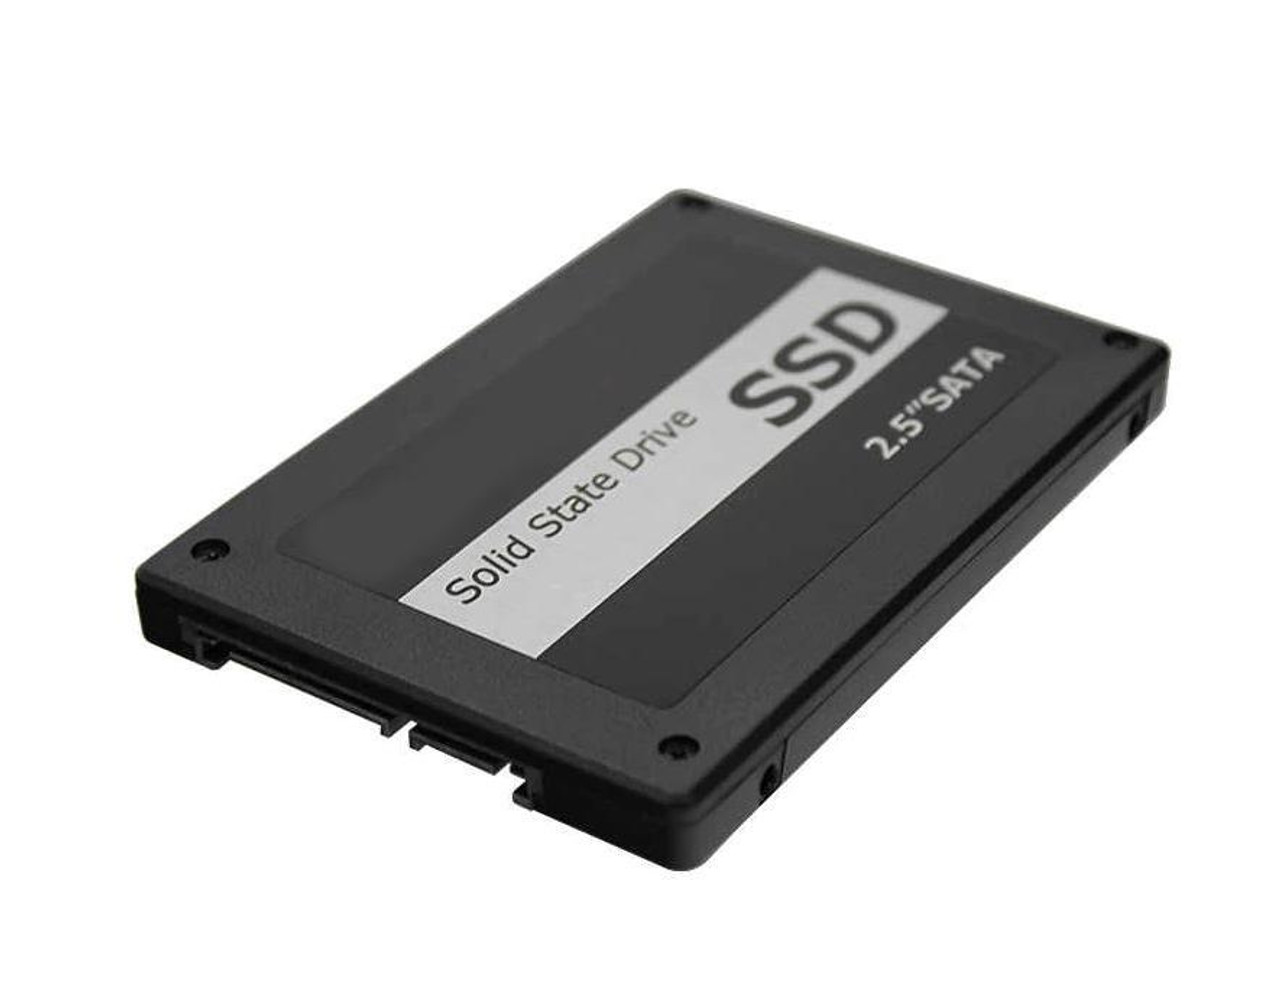 MTFDDAK240TDN HP 240GB TLC SATA 6Gbps Mixed Use 2.5-inch Internal Solid State Drive (SSD)